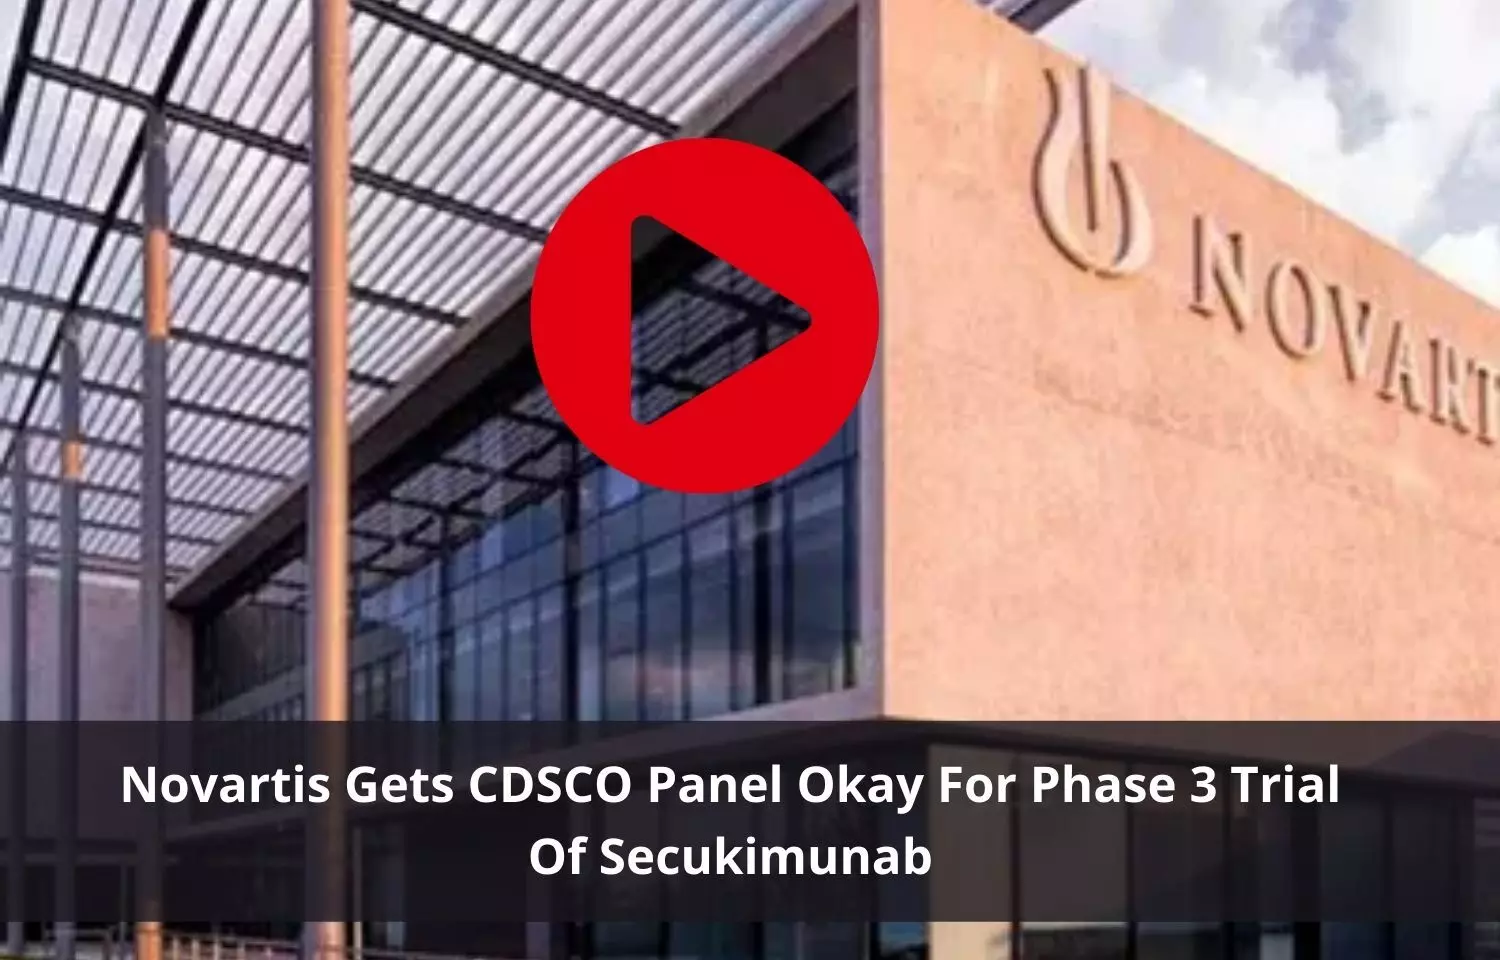 Novartis bags CDSCO panel nod for Phase 3 trial of Secukimunab